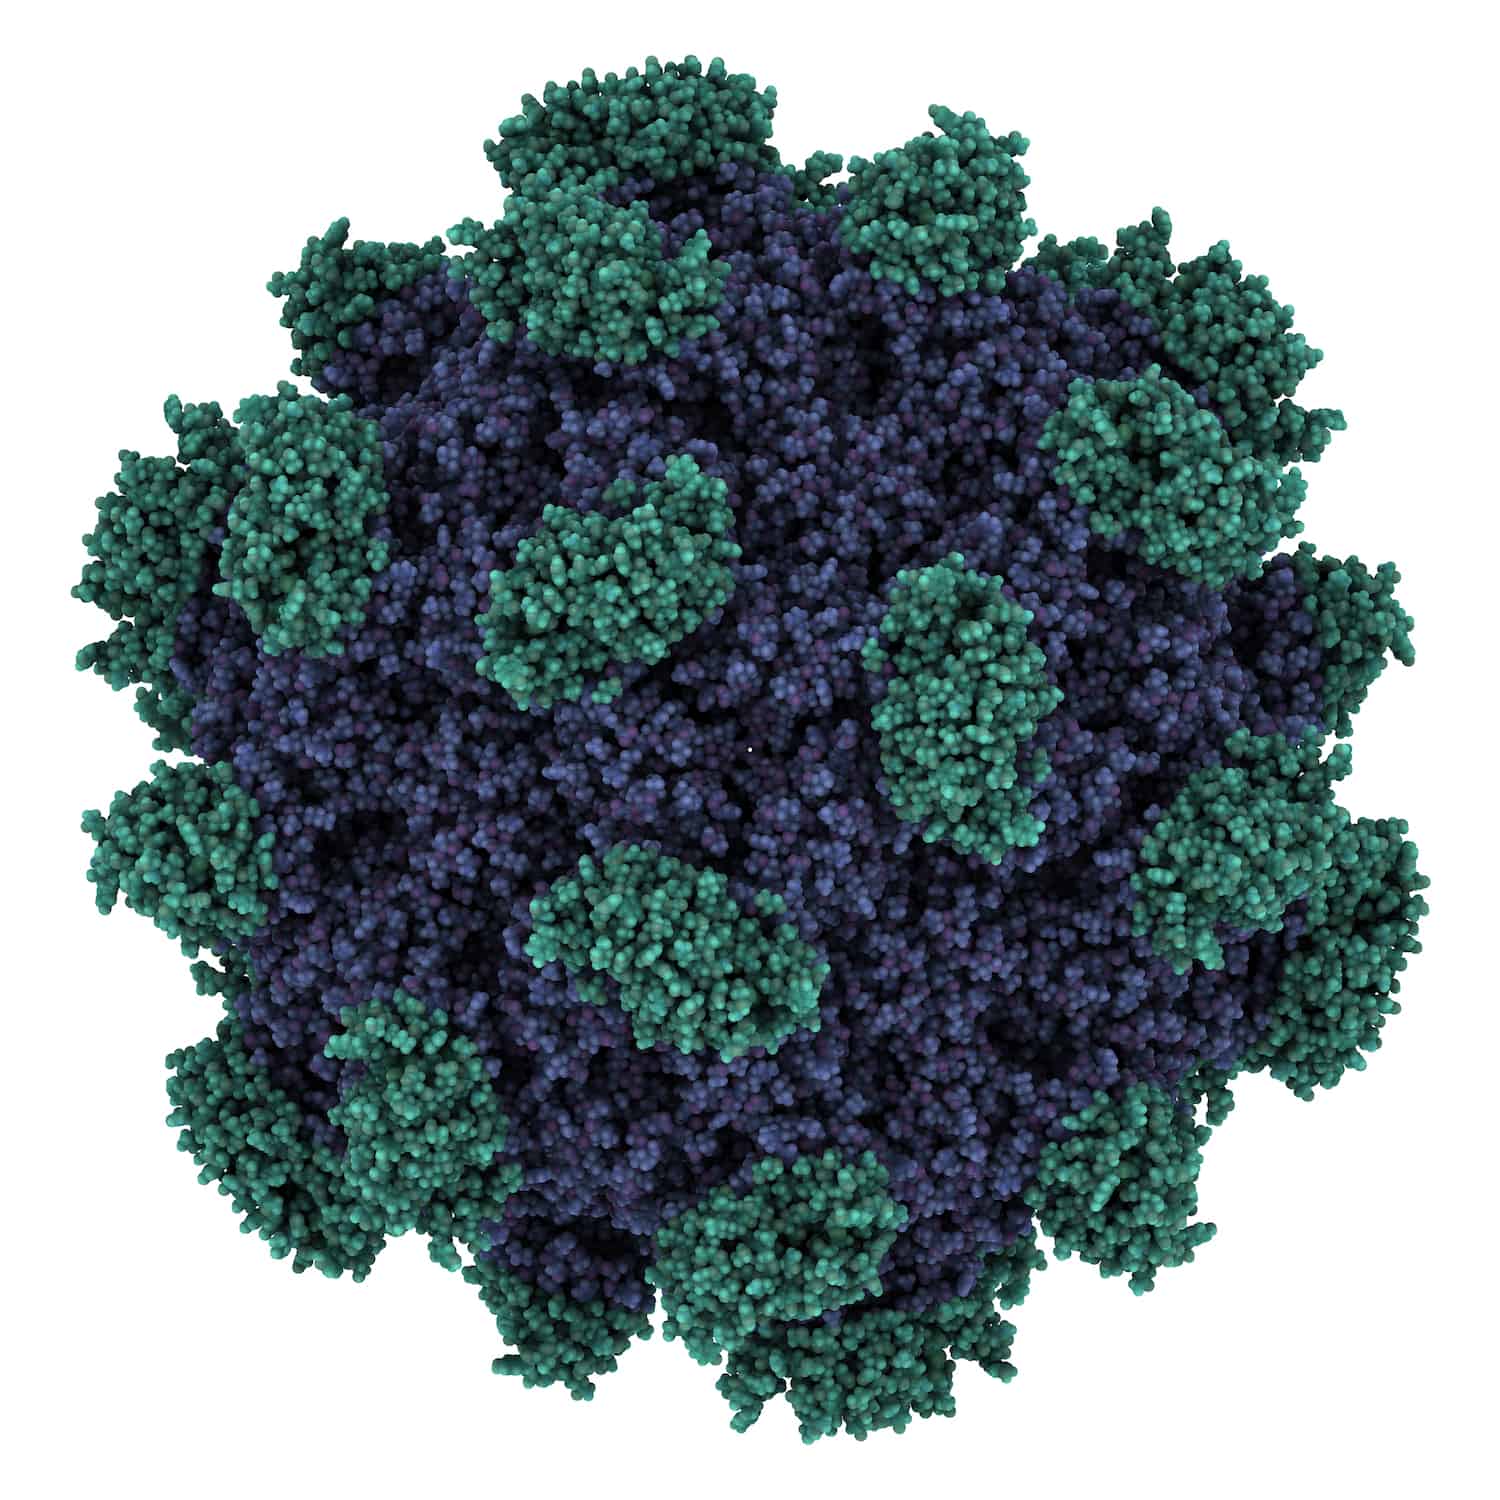 Hepatitis E virus capsid structure